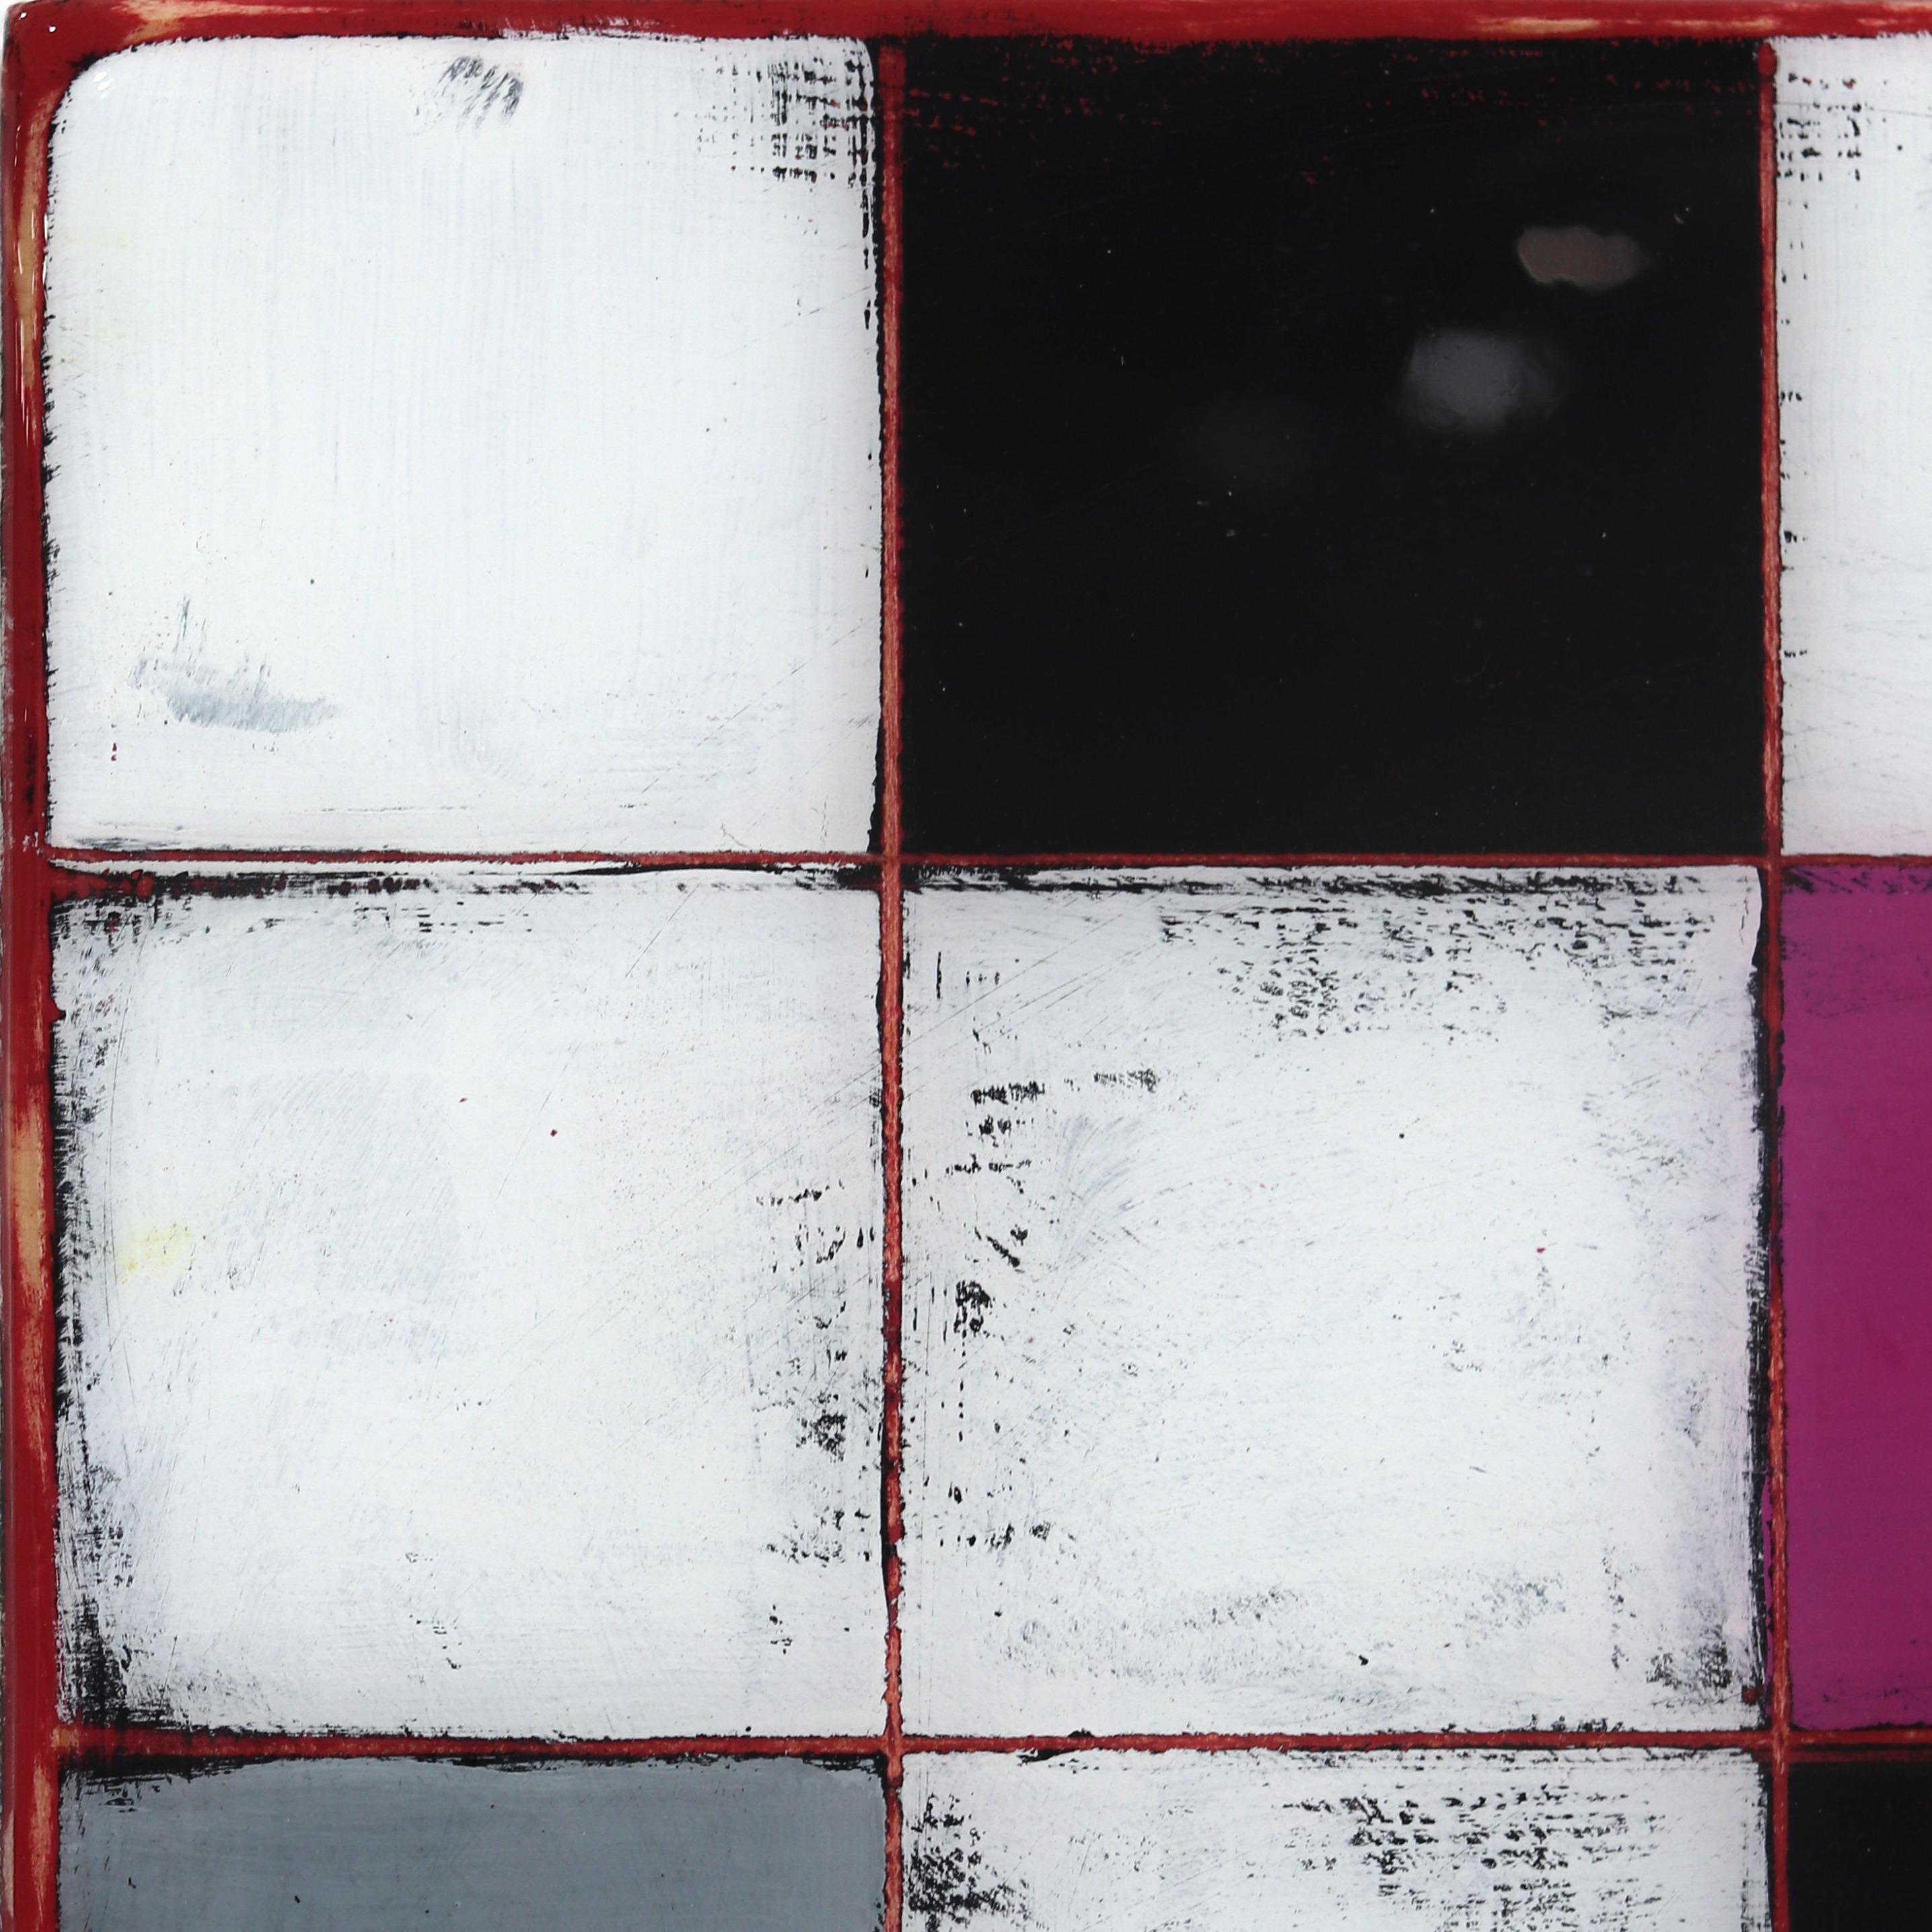 Jazz 23 - Acrylic Checkerboard Black and White Jewel Tone Resin Artwork - Minimalist Mixed Media Art by Ricky Hunt